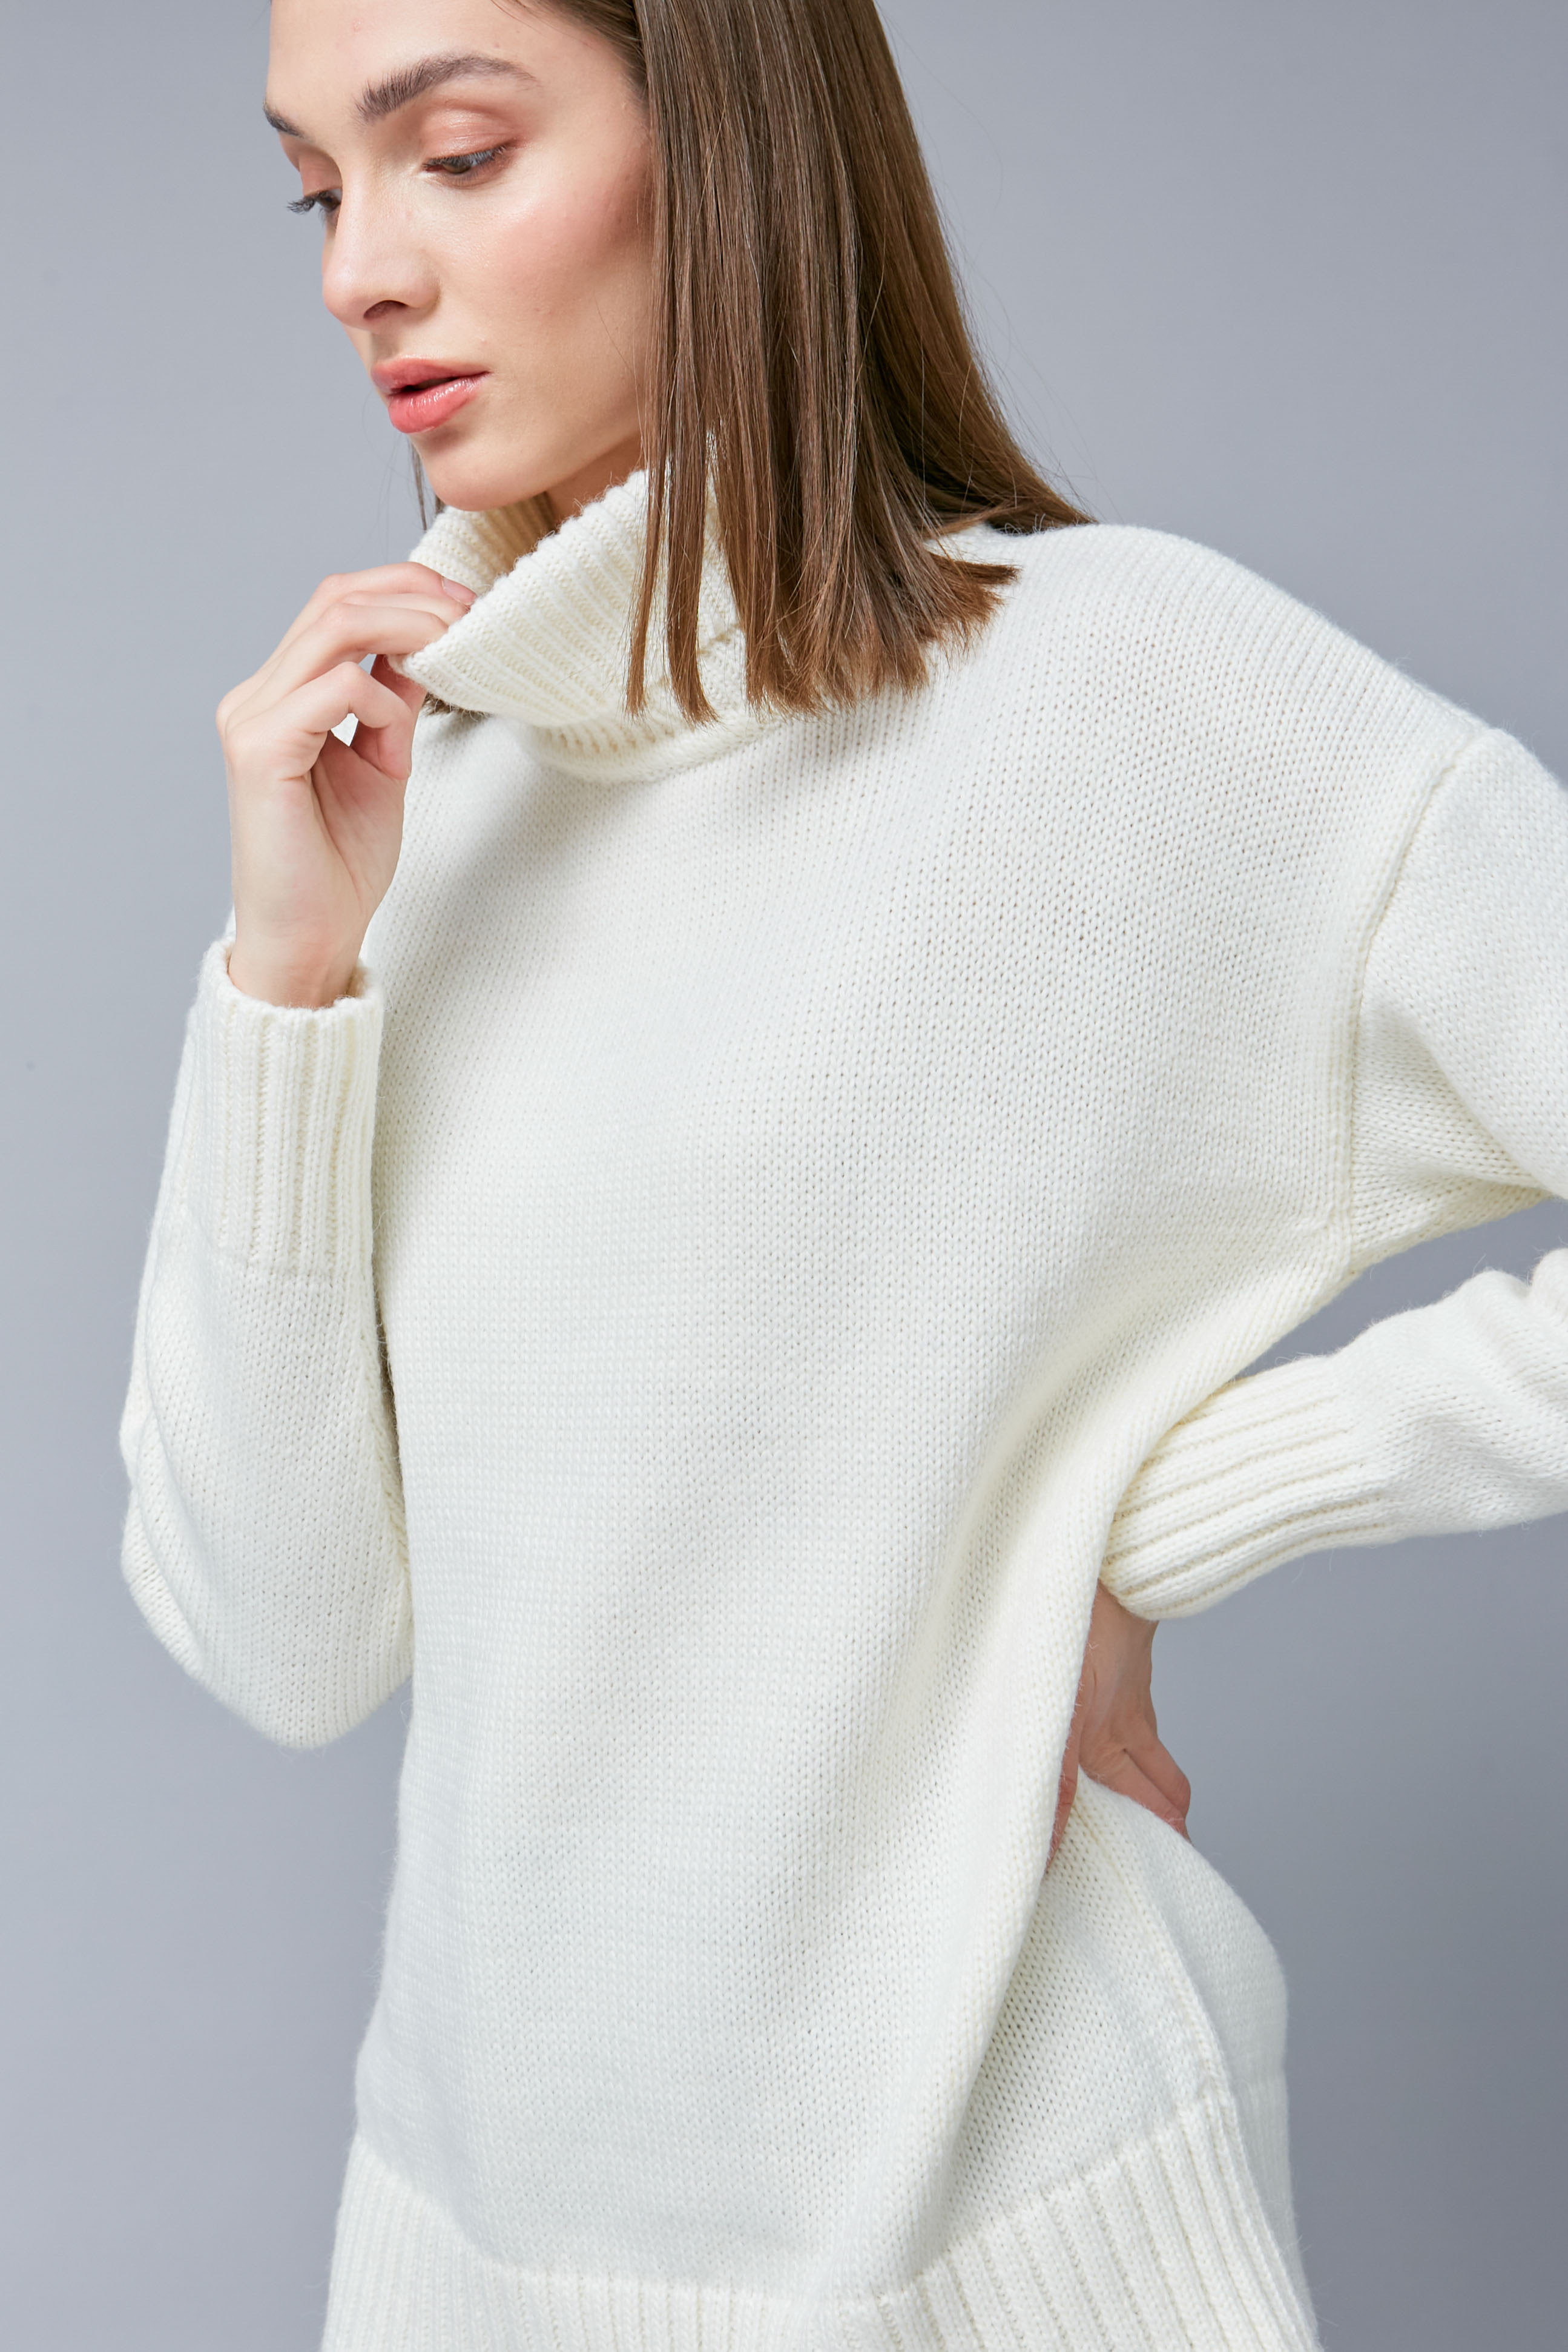 White knit turtleneck sweater, photo 1